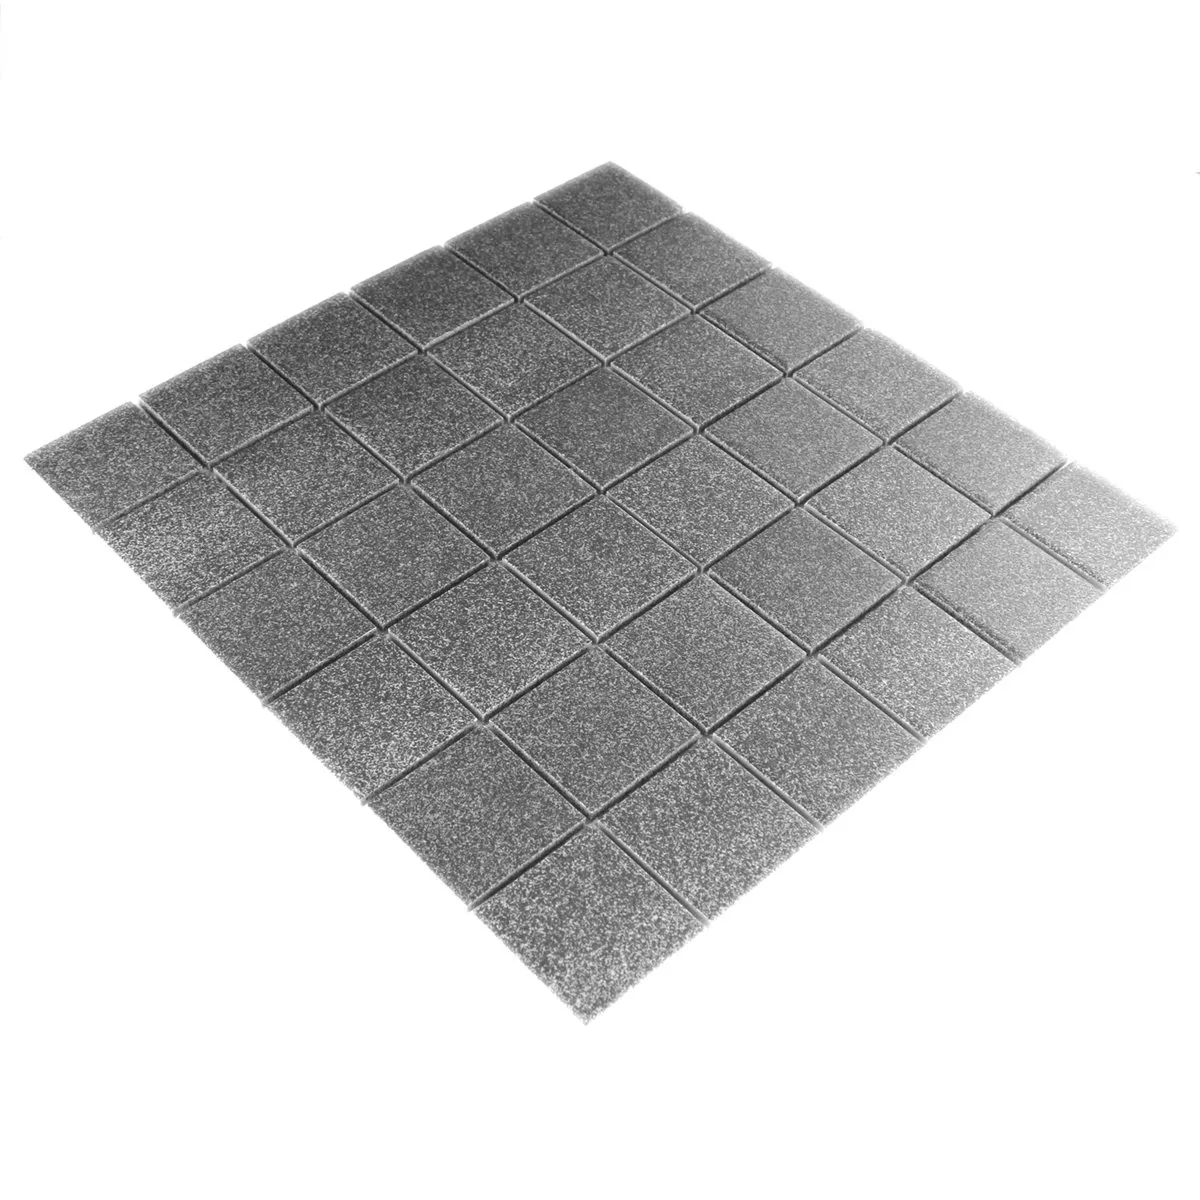 Mosaic Tiles Ceramic Stonegrey Non-Slip Q48